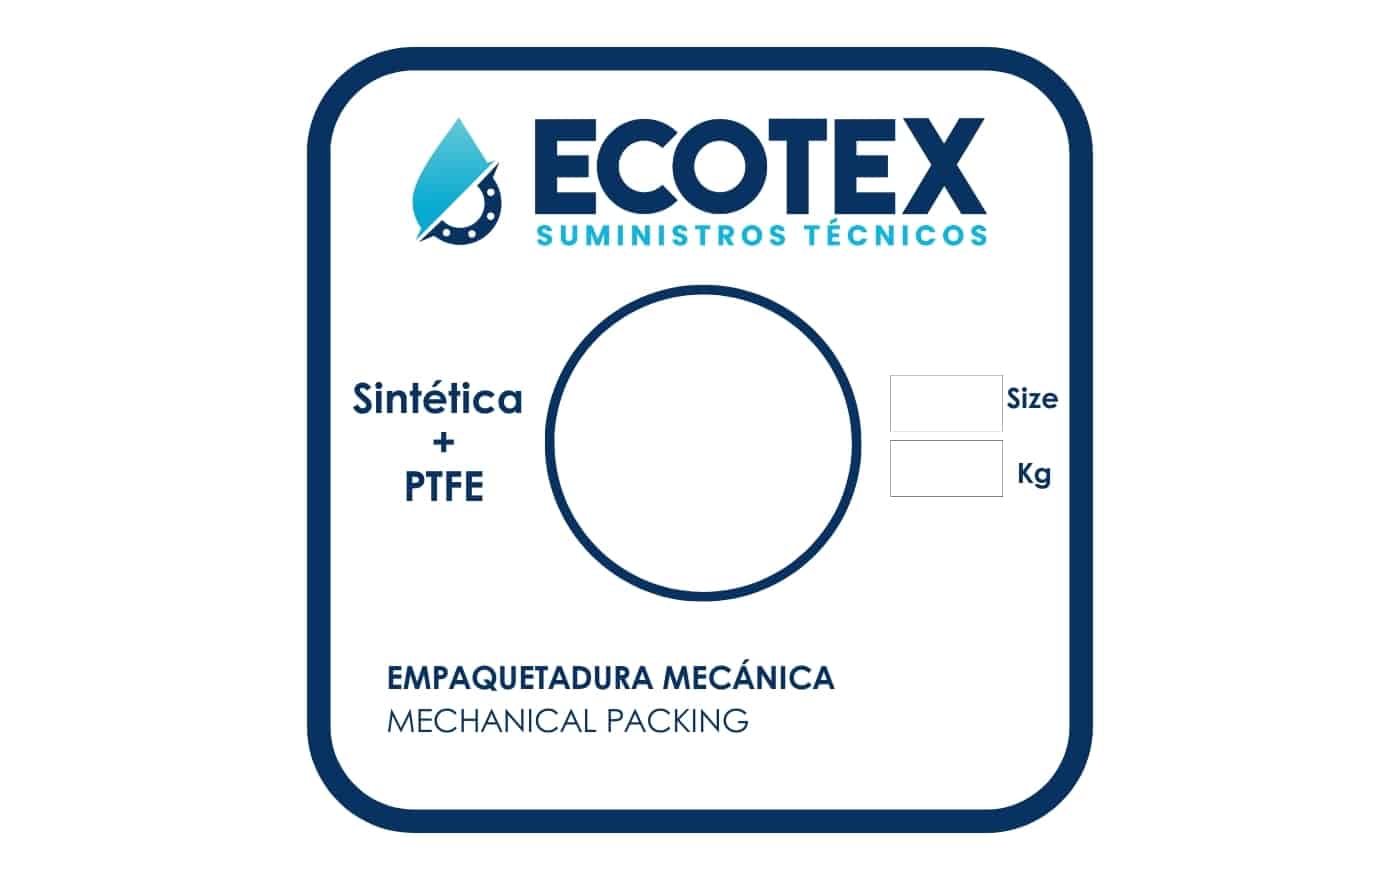 ECOTEX Sintética + PTFE